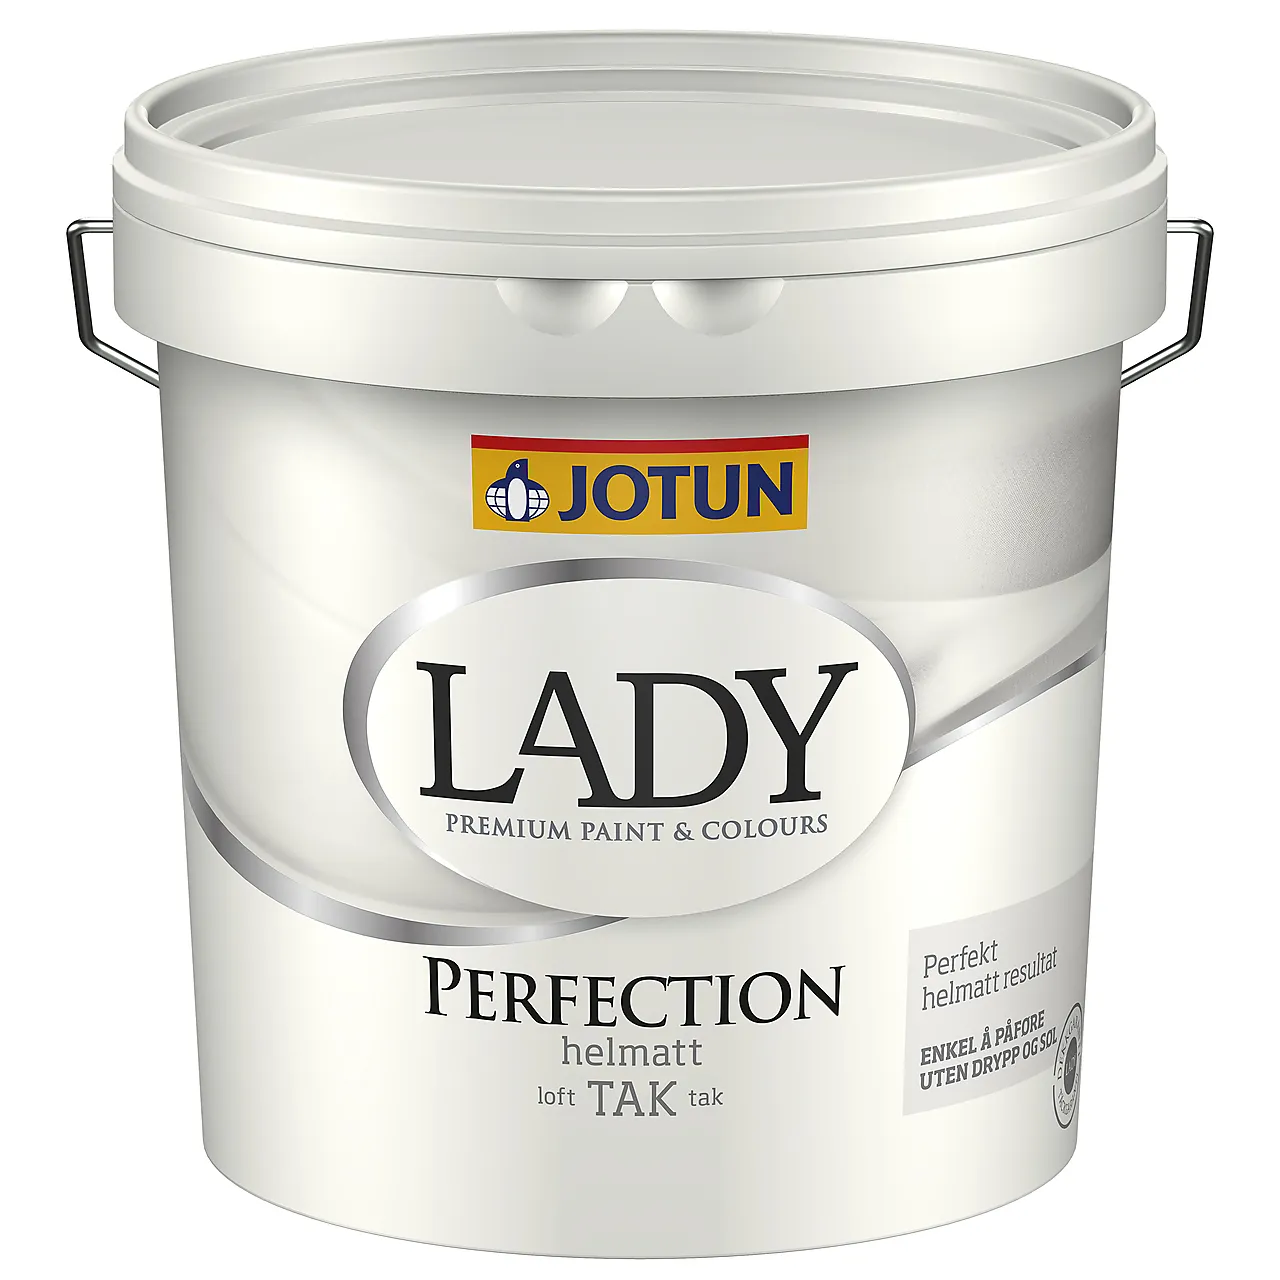 Jotun lady perfection tak b-base 2,7 liter